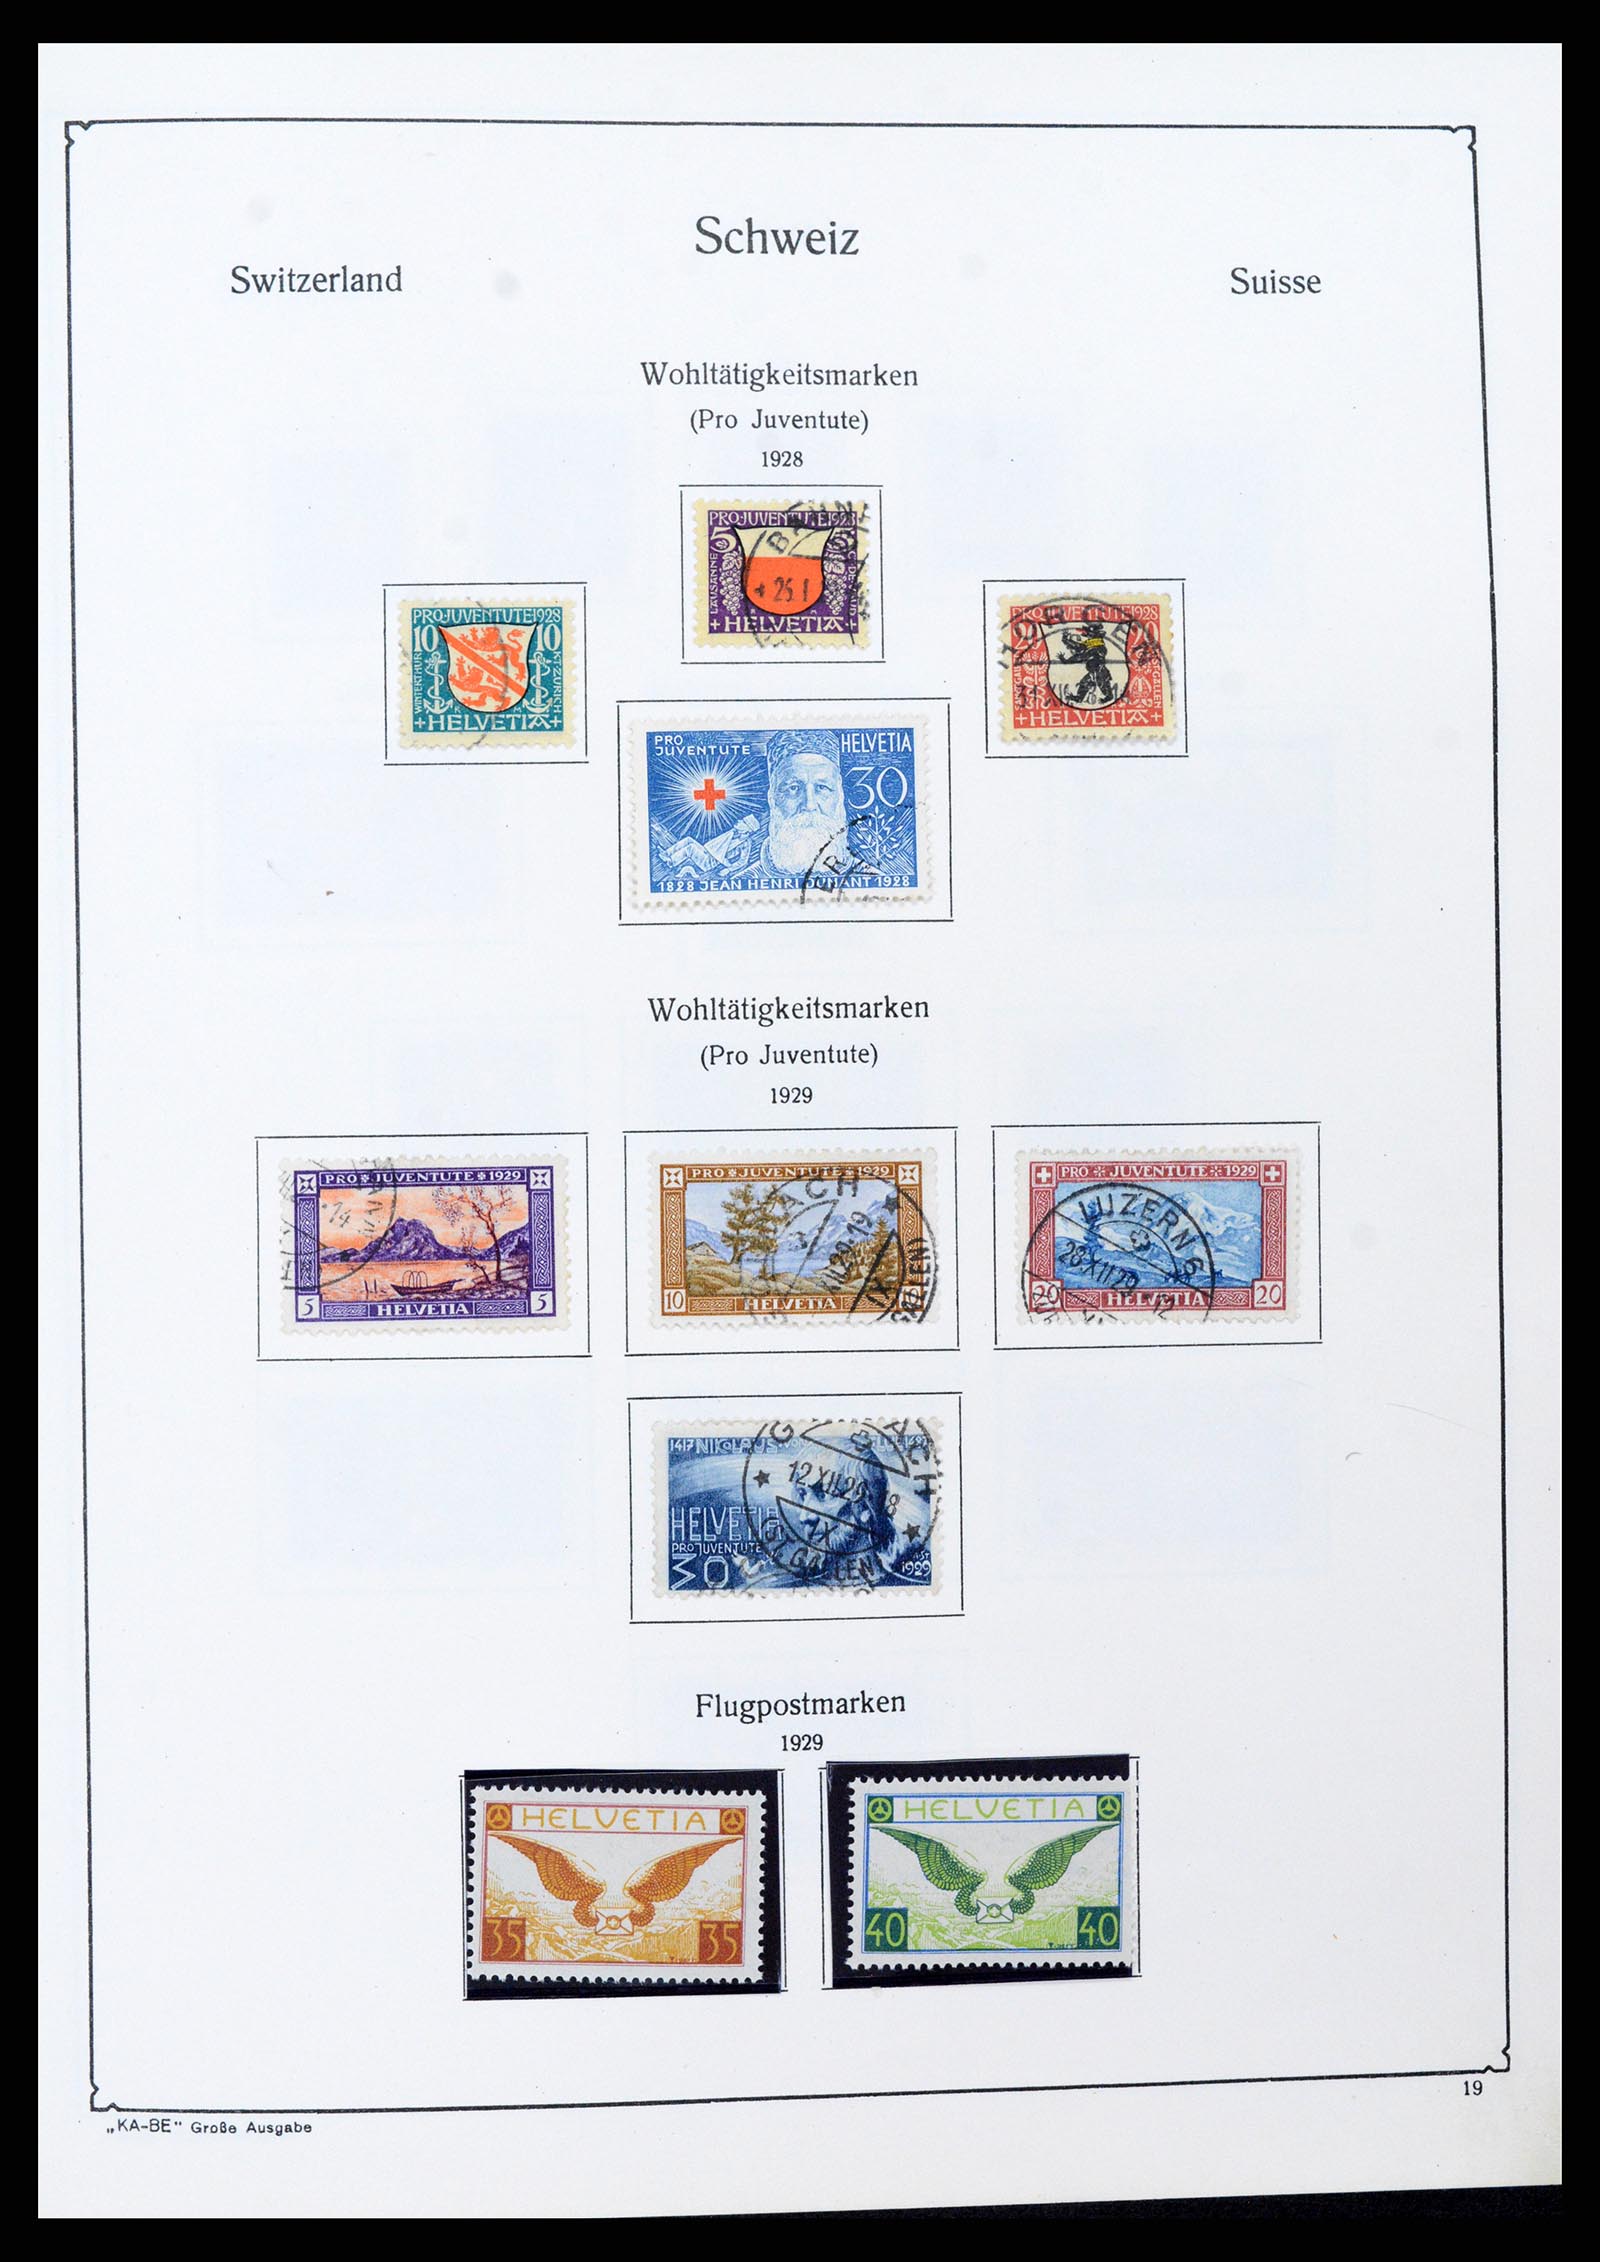 37588 018 - Stamp collection 37588 Switzerland 1854-1974.